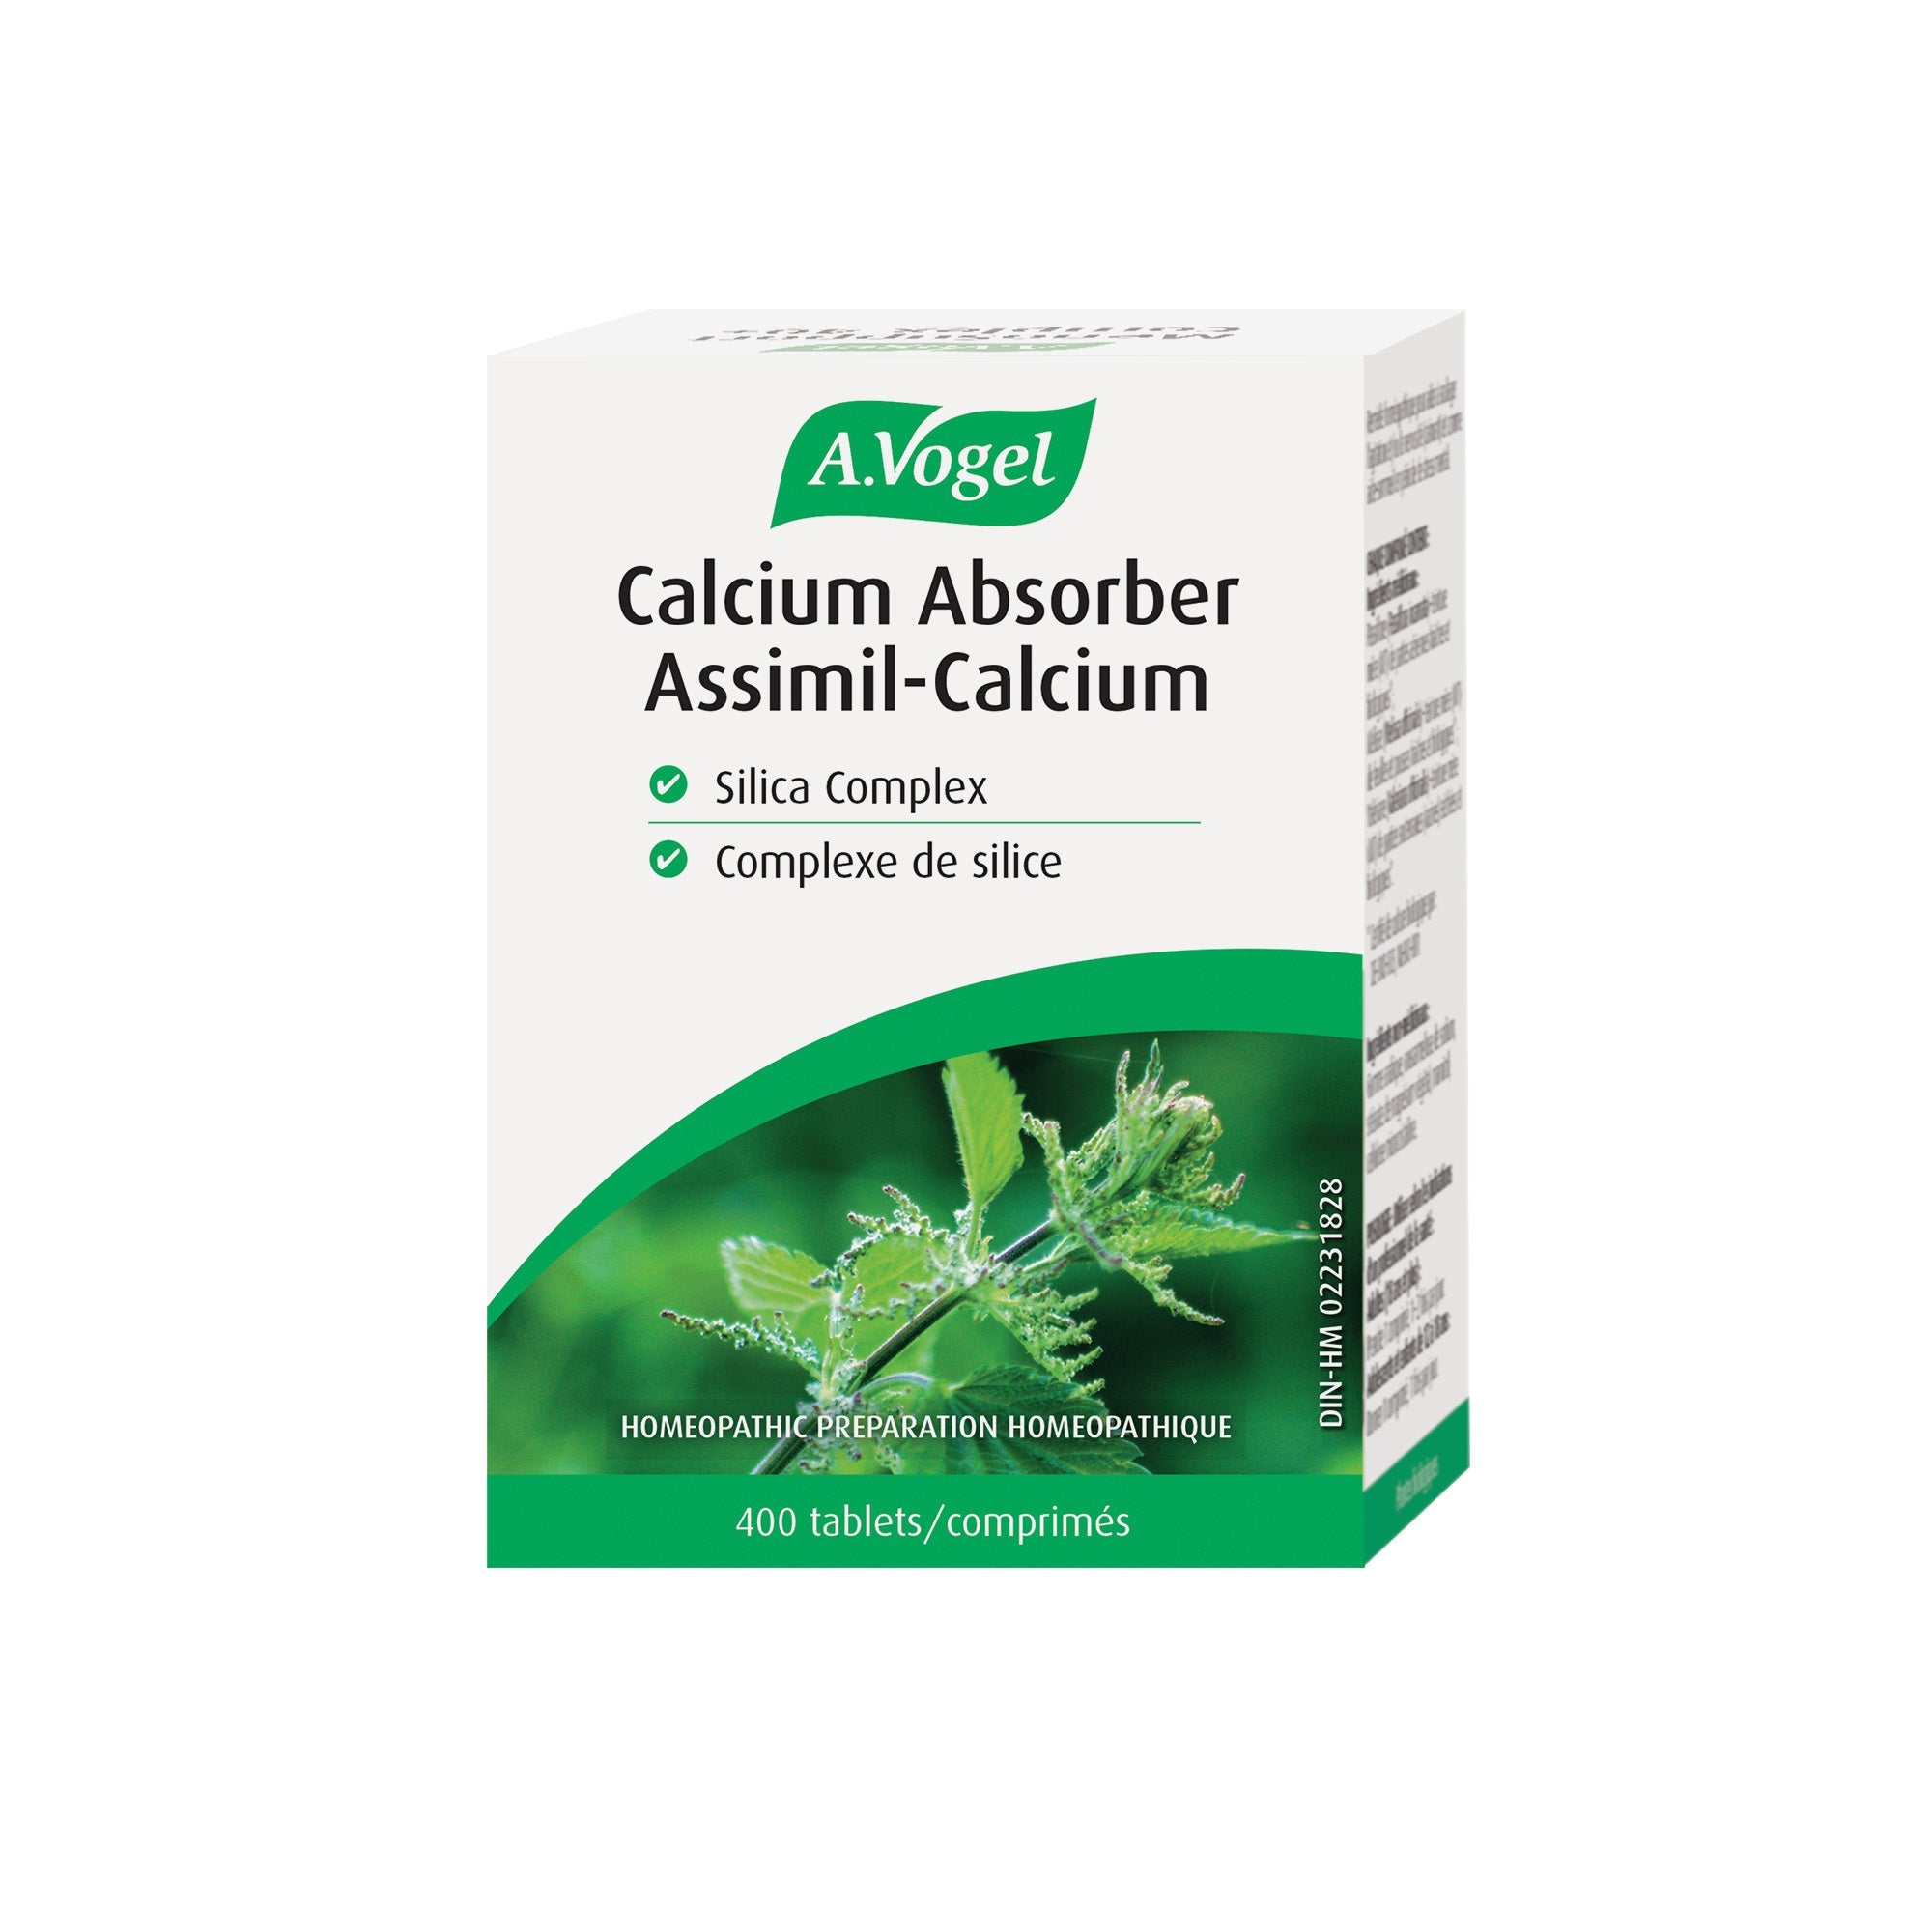 A. Vogel Calcium Absorber Urticalcin 400 Tablets